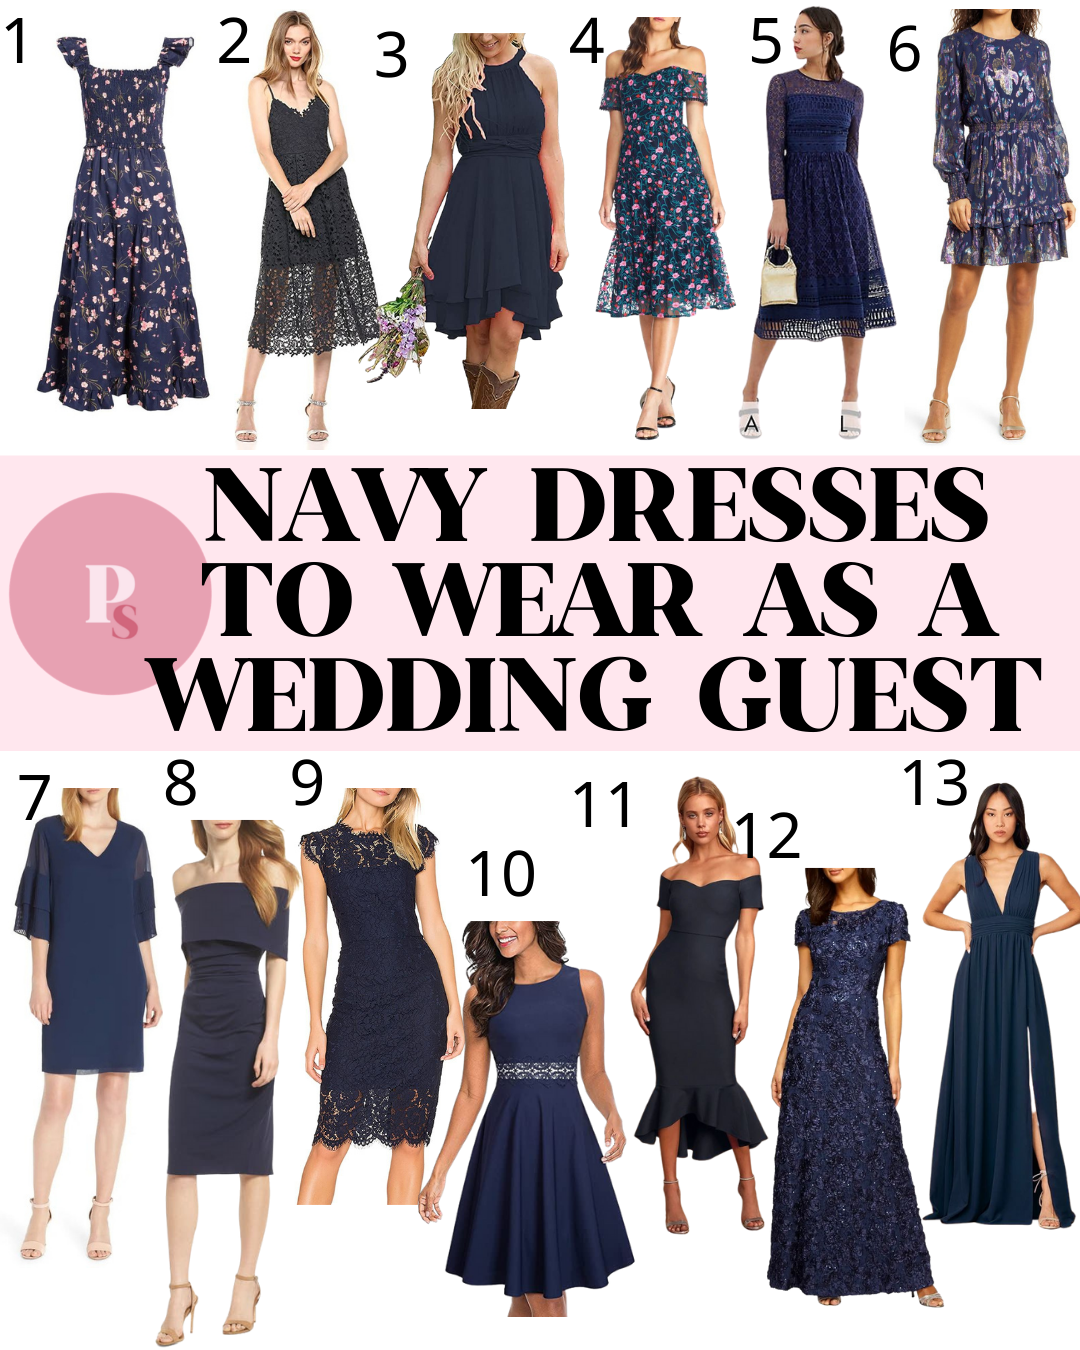 wedding guest navy dress accessories